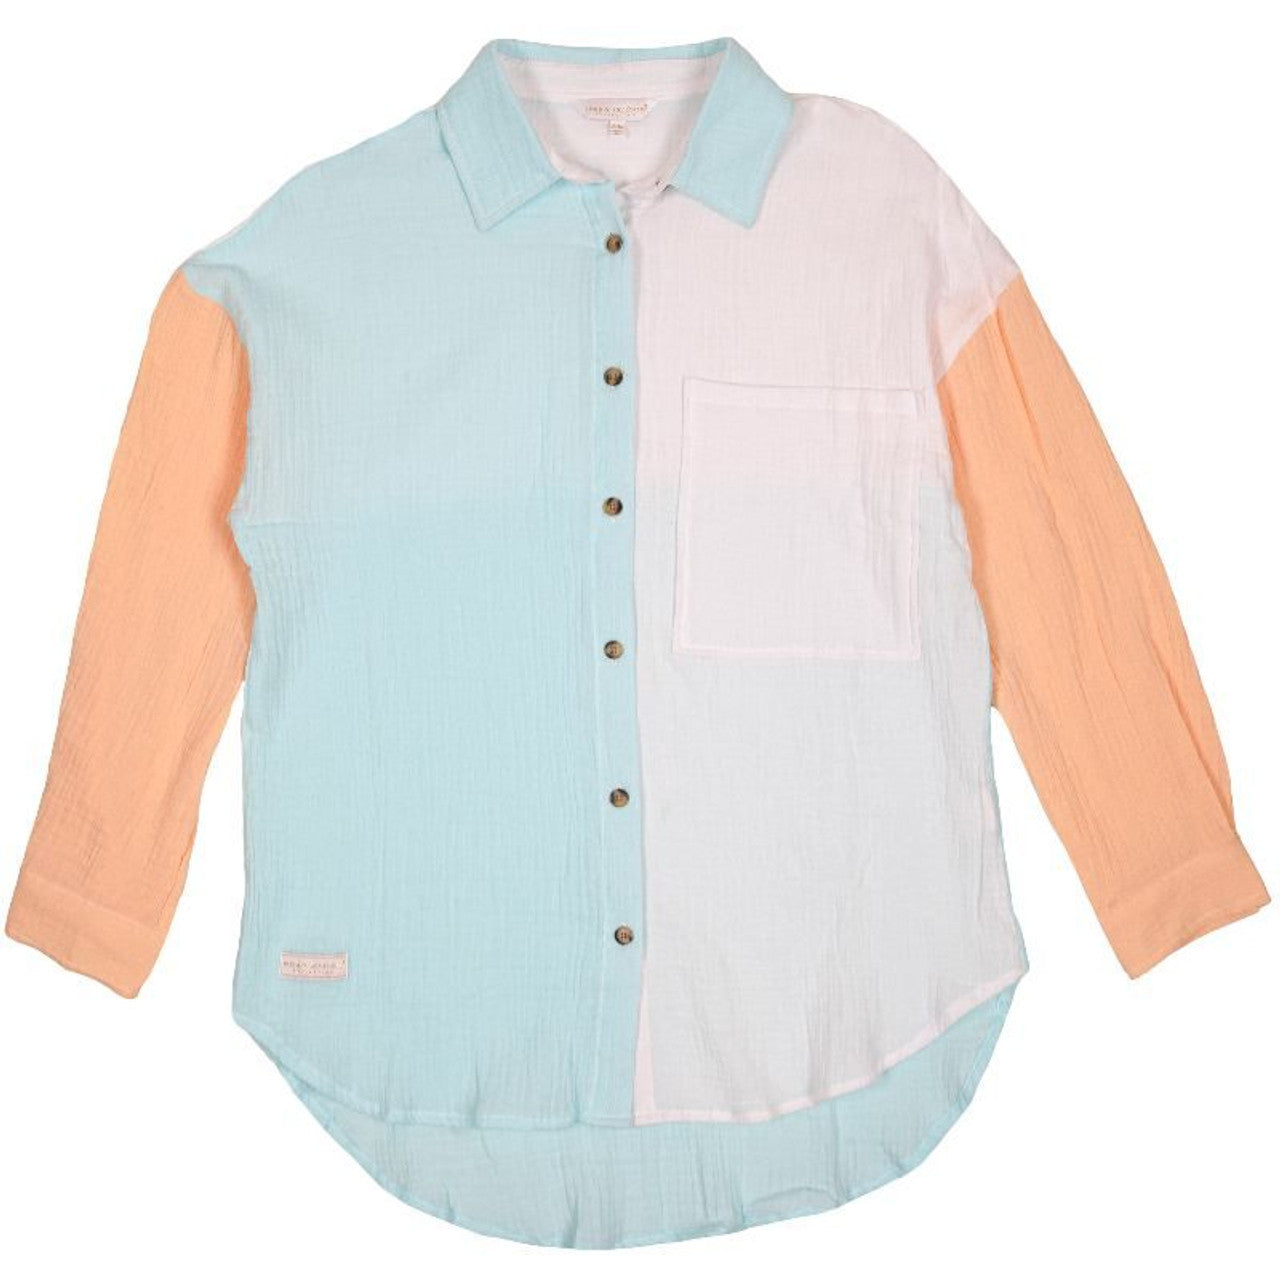 Colorblock Button Up Shirt